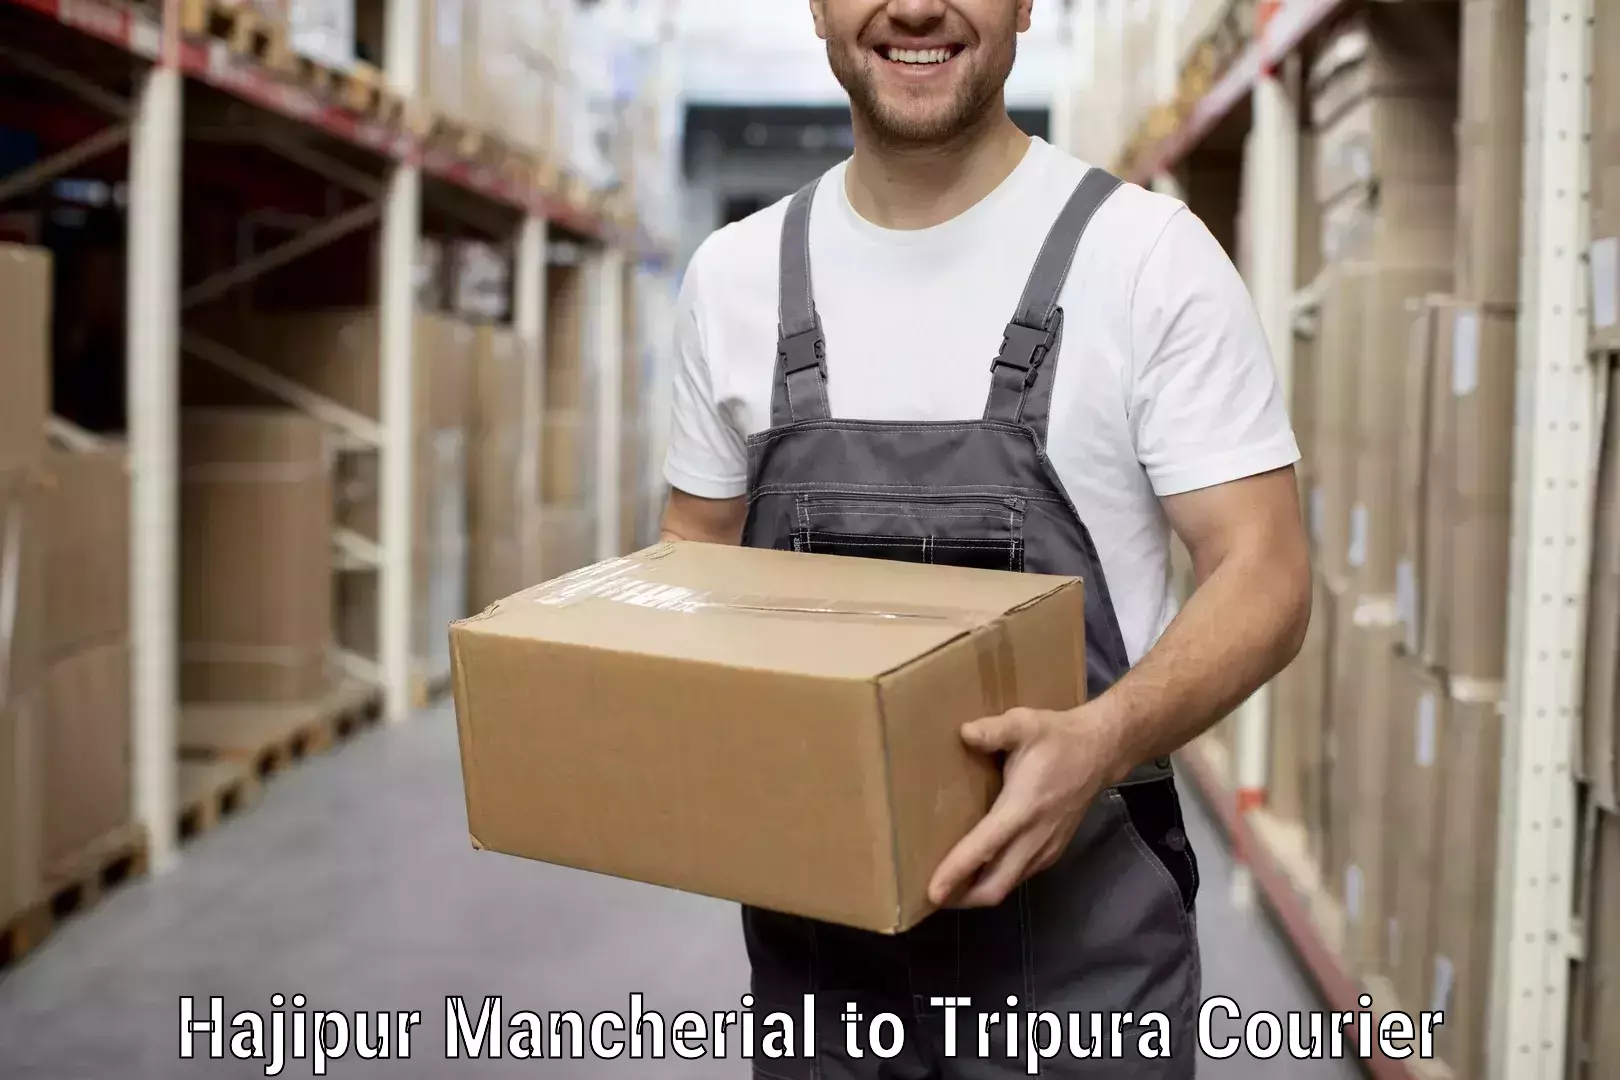 Quality moving company Hajipur Mancherial to North Tripura